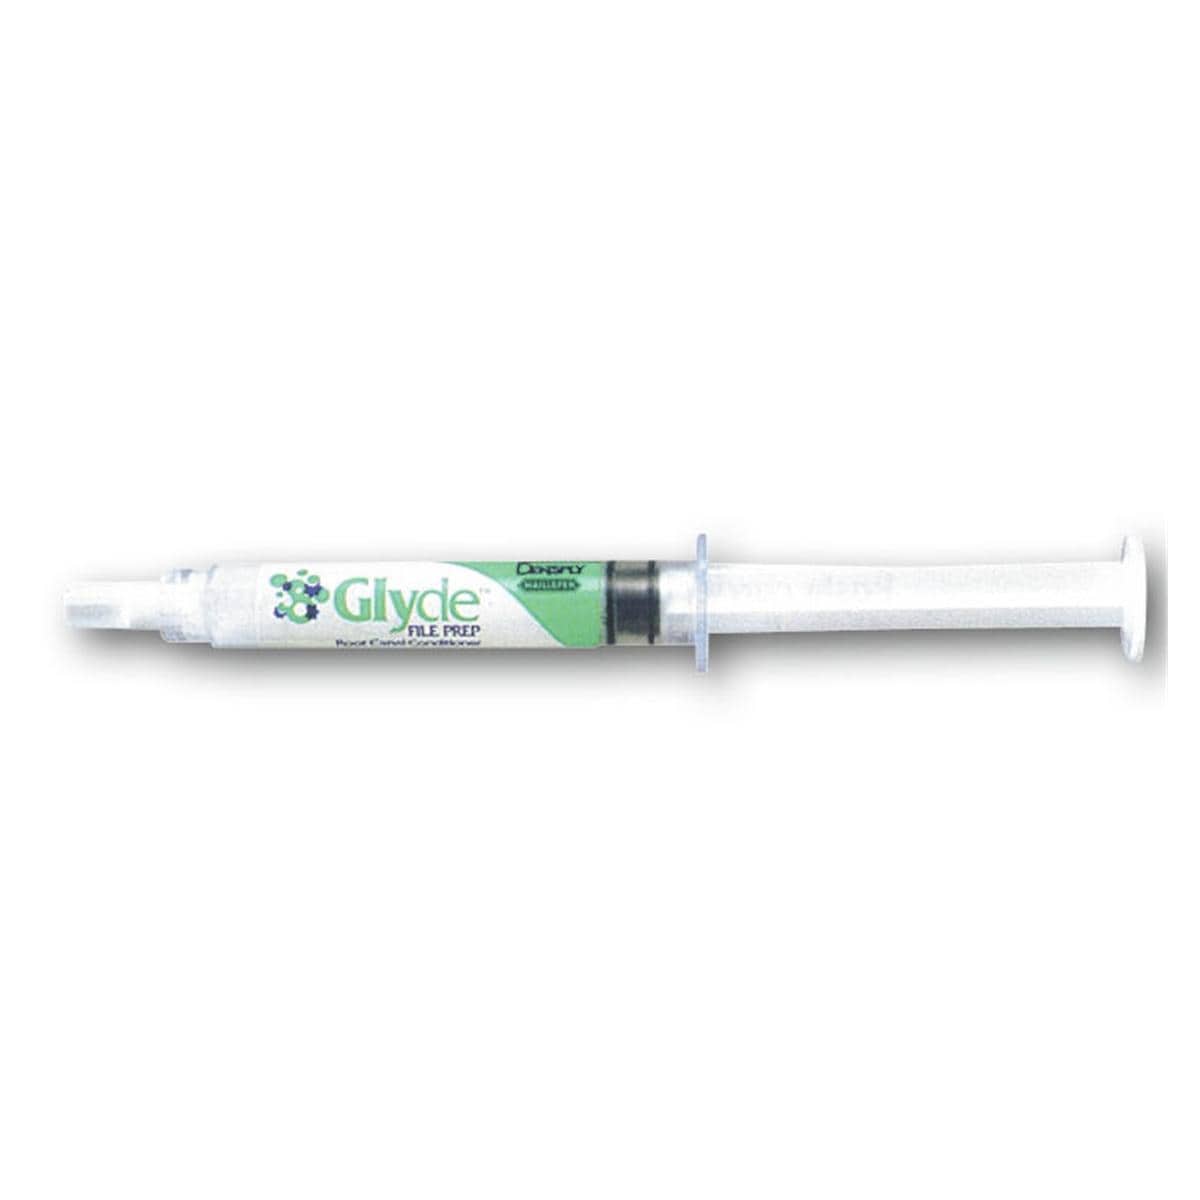 Glyde File Prep - Recharge, 3 seringues de 3 ml Rf. A0901